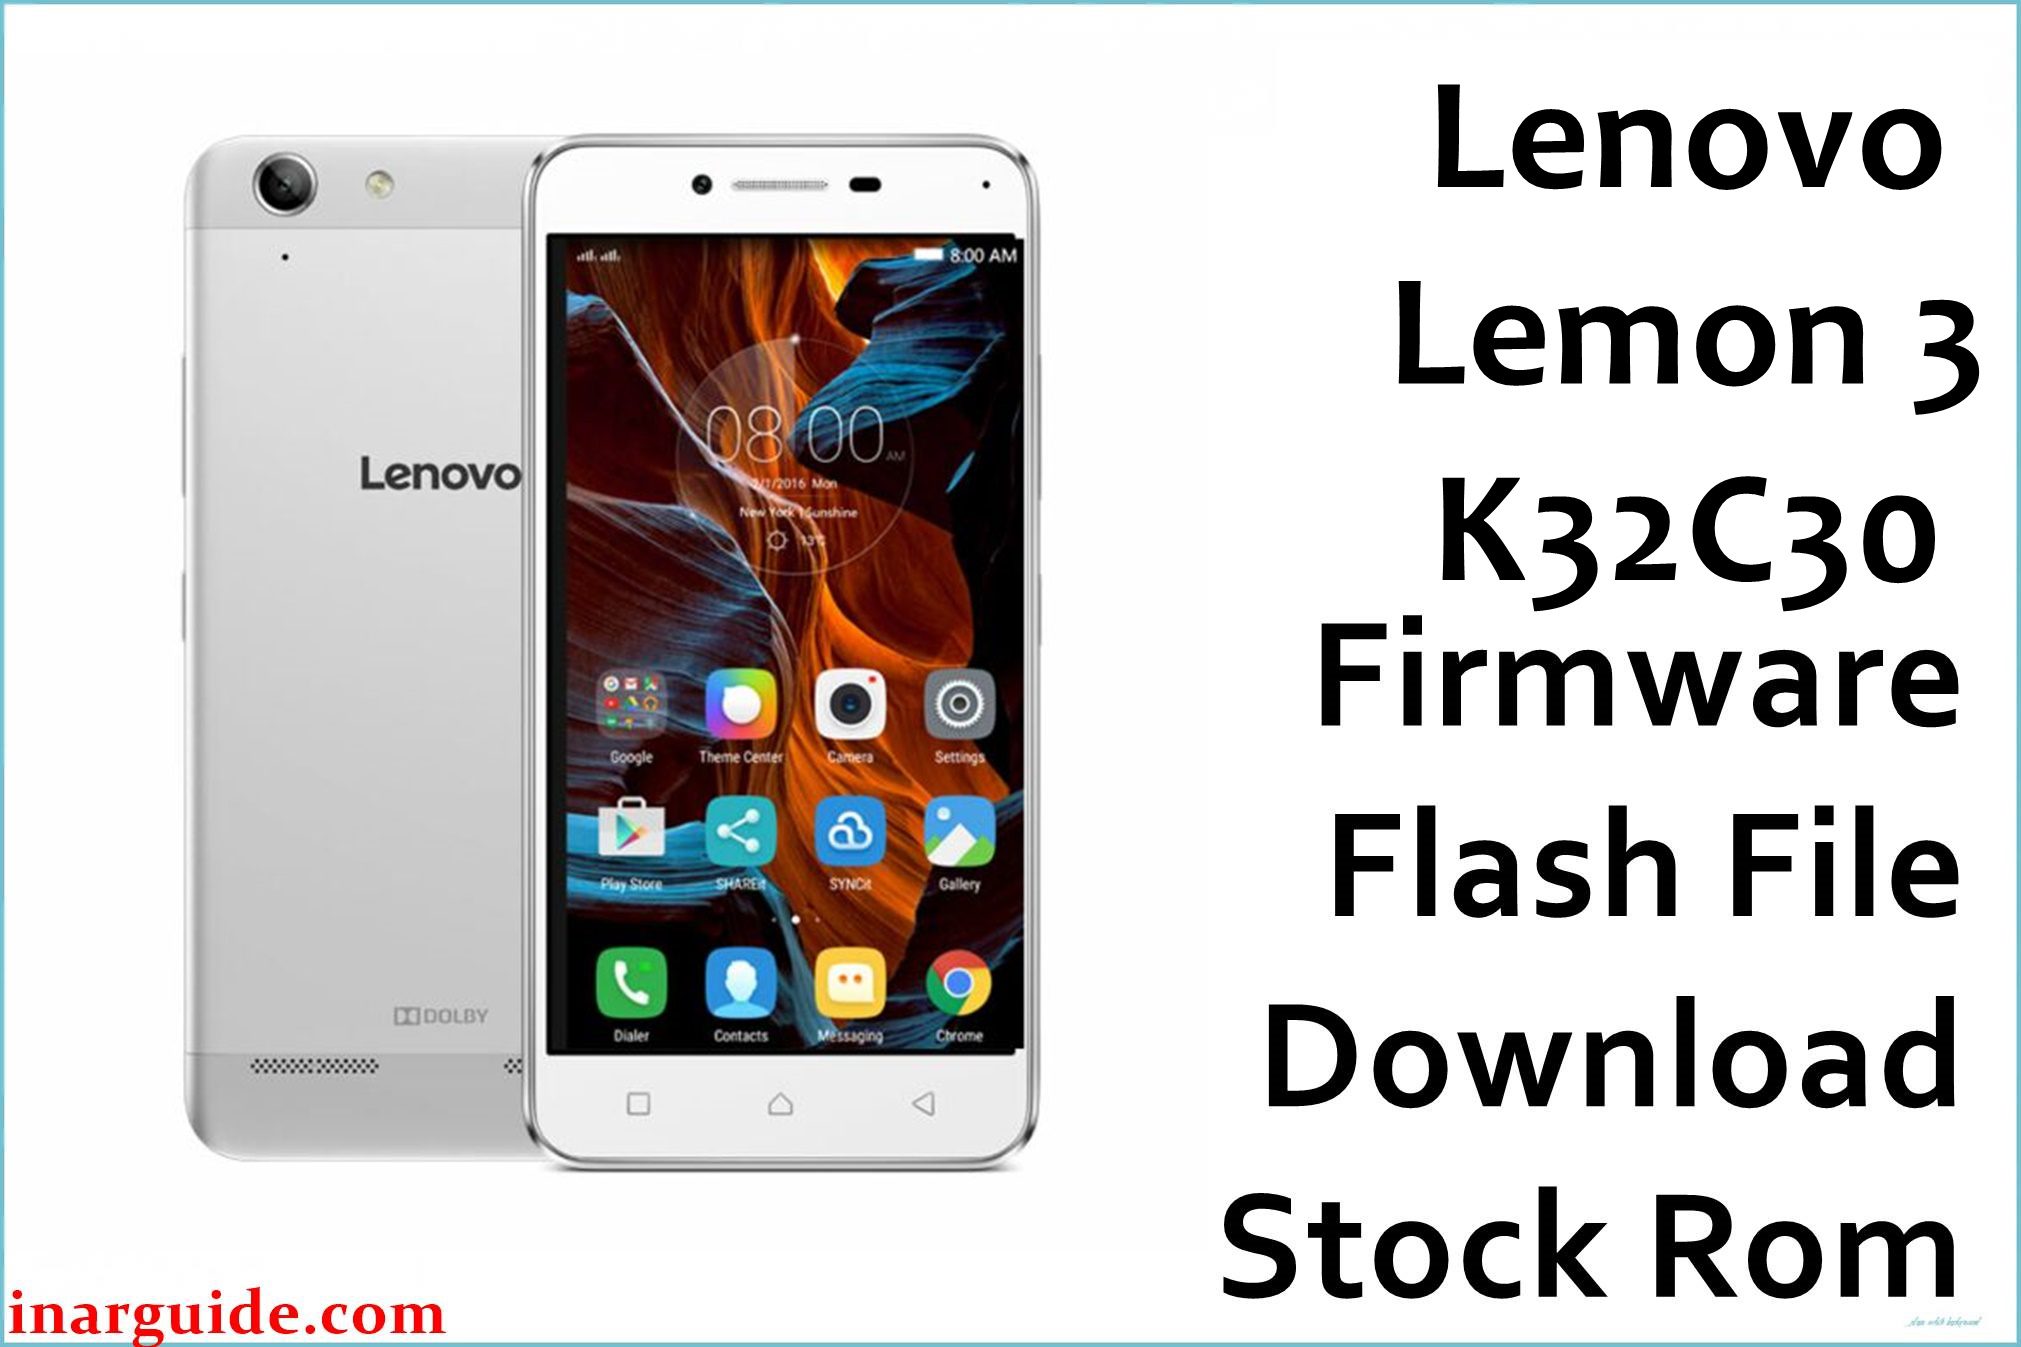 Lenovo Lemon 3 K32C30 Firmware Flash File Download [Stock Rom]